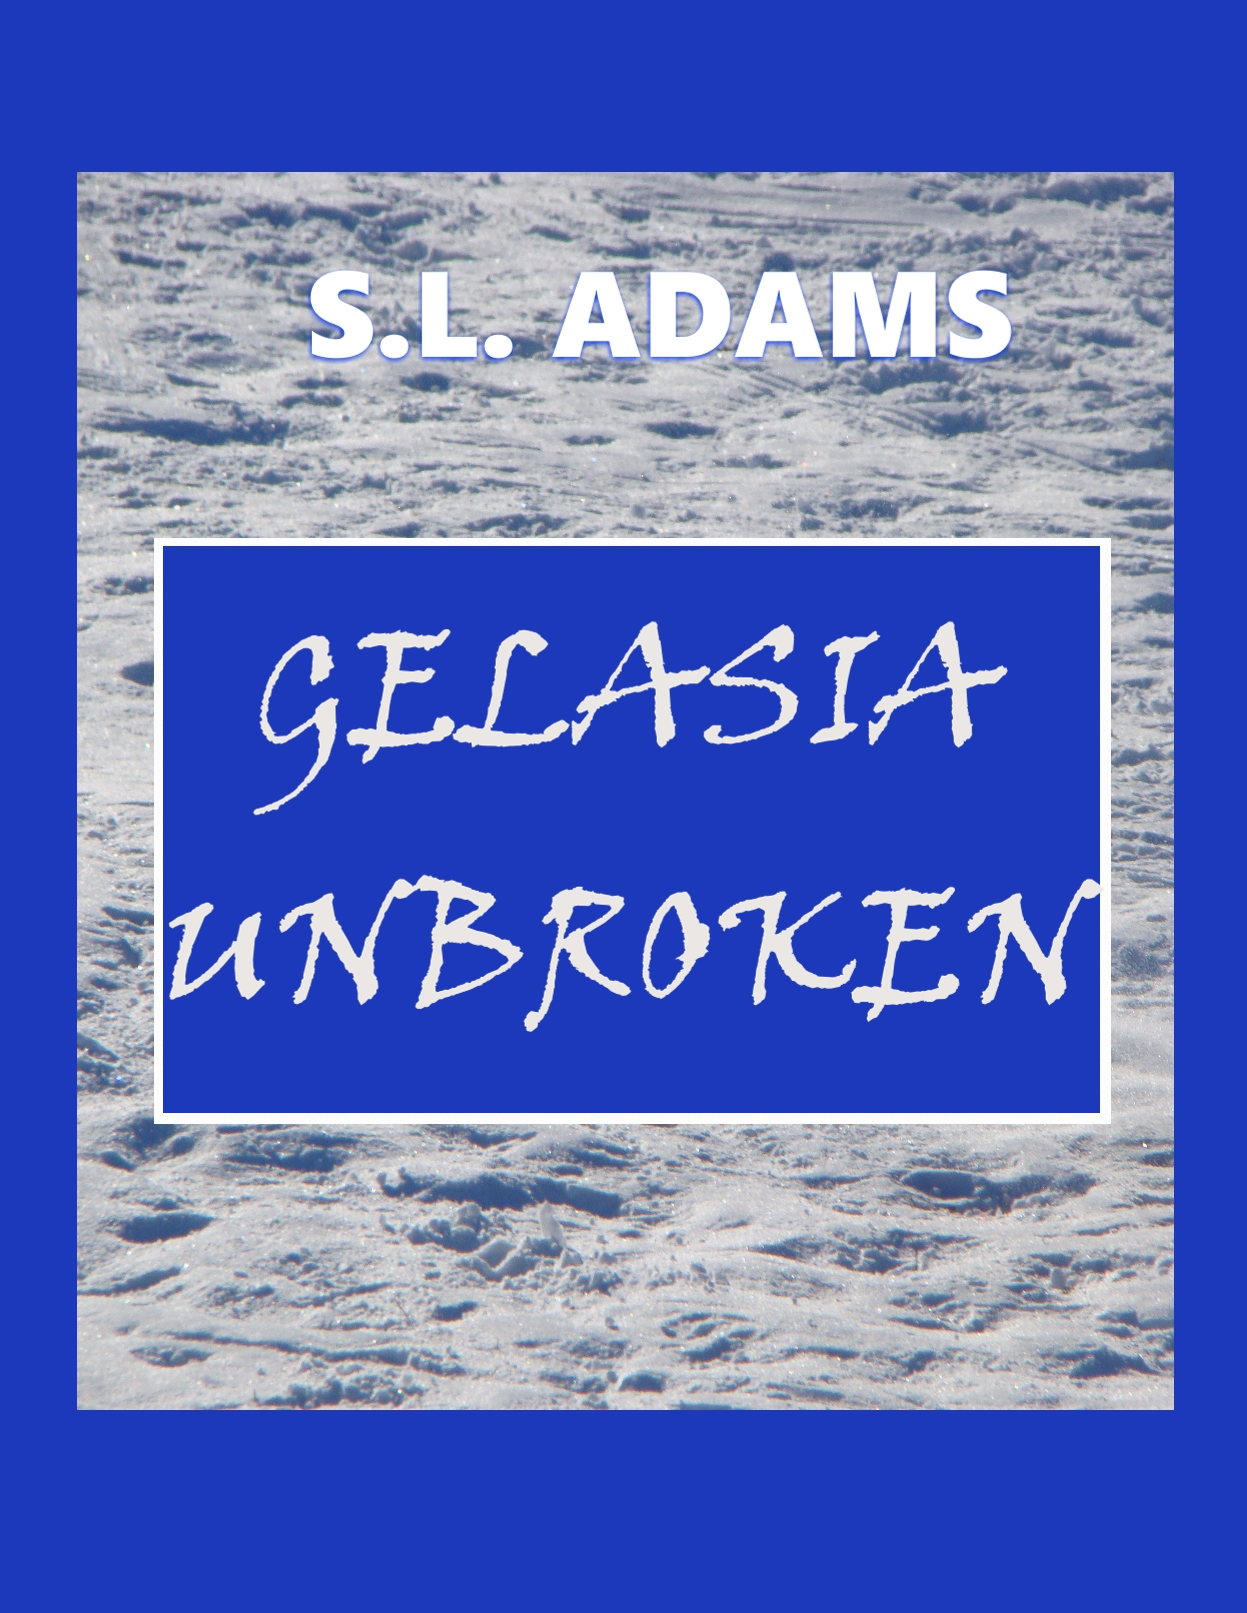 FREE: Gelasia Unbroken by S.L. Adams